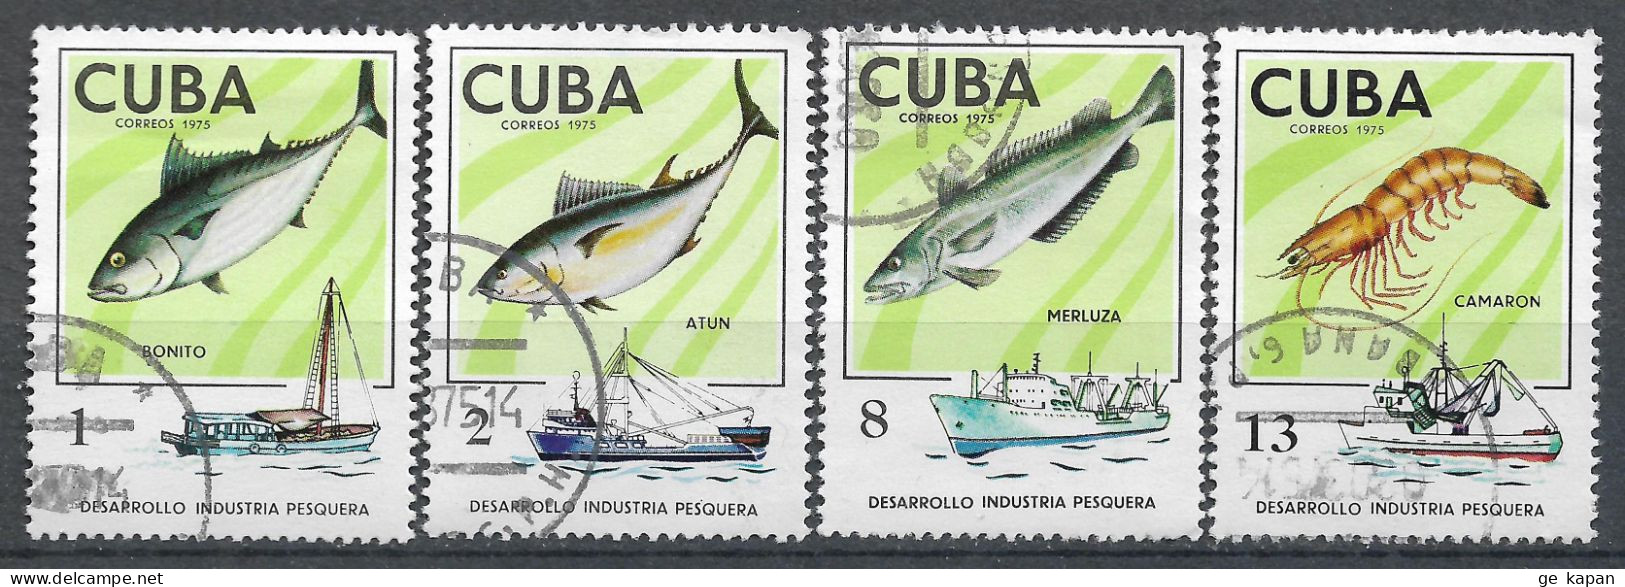 1975 CUBA Set Of 4 Used Stamps (Michel # 2030,2031,2033,2035) CV €1.80 - Usati